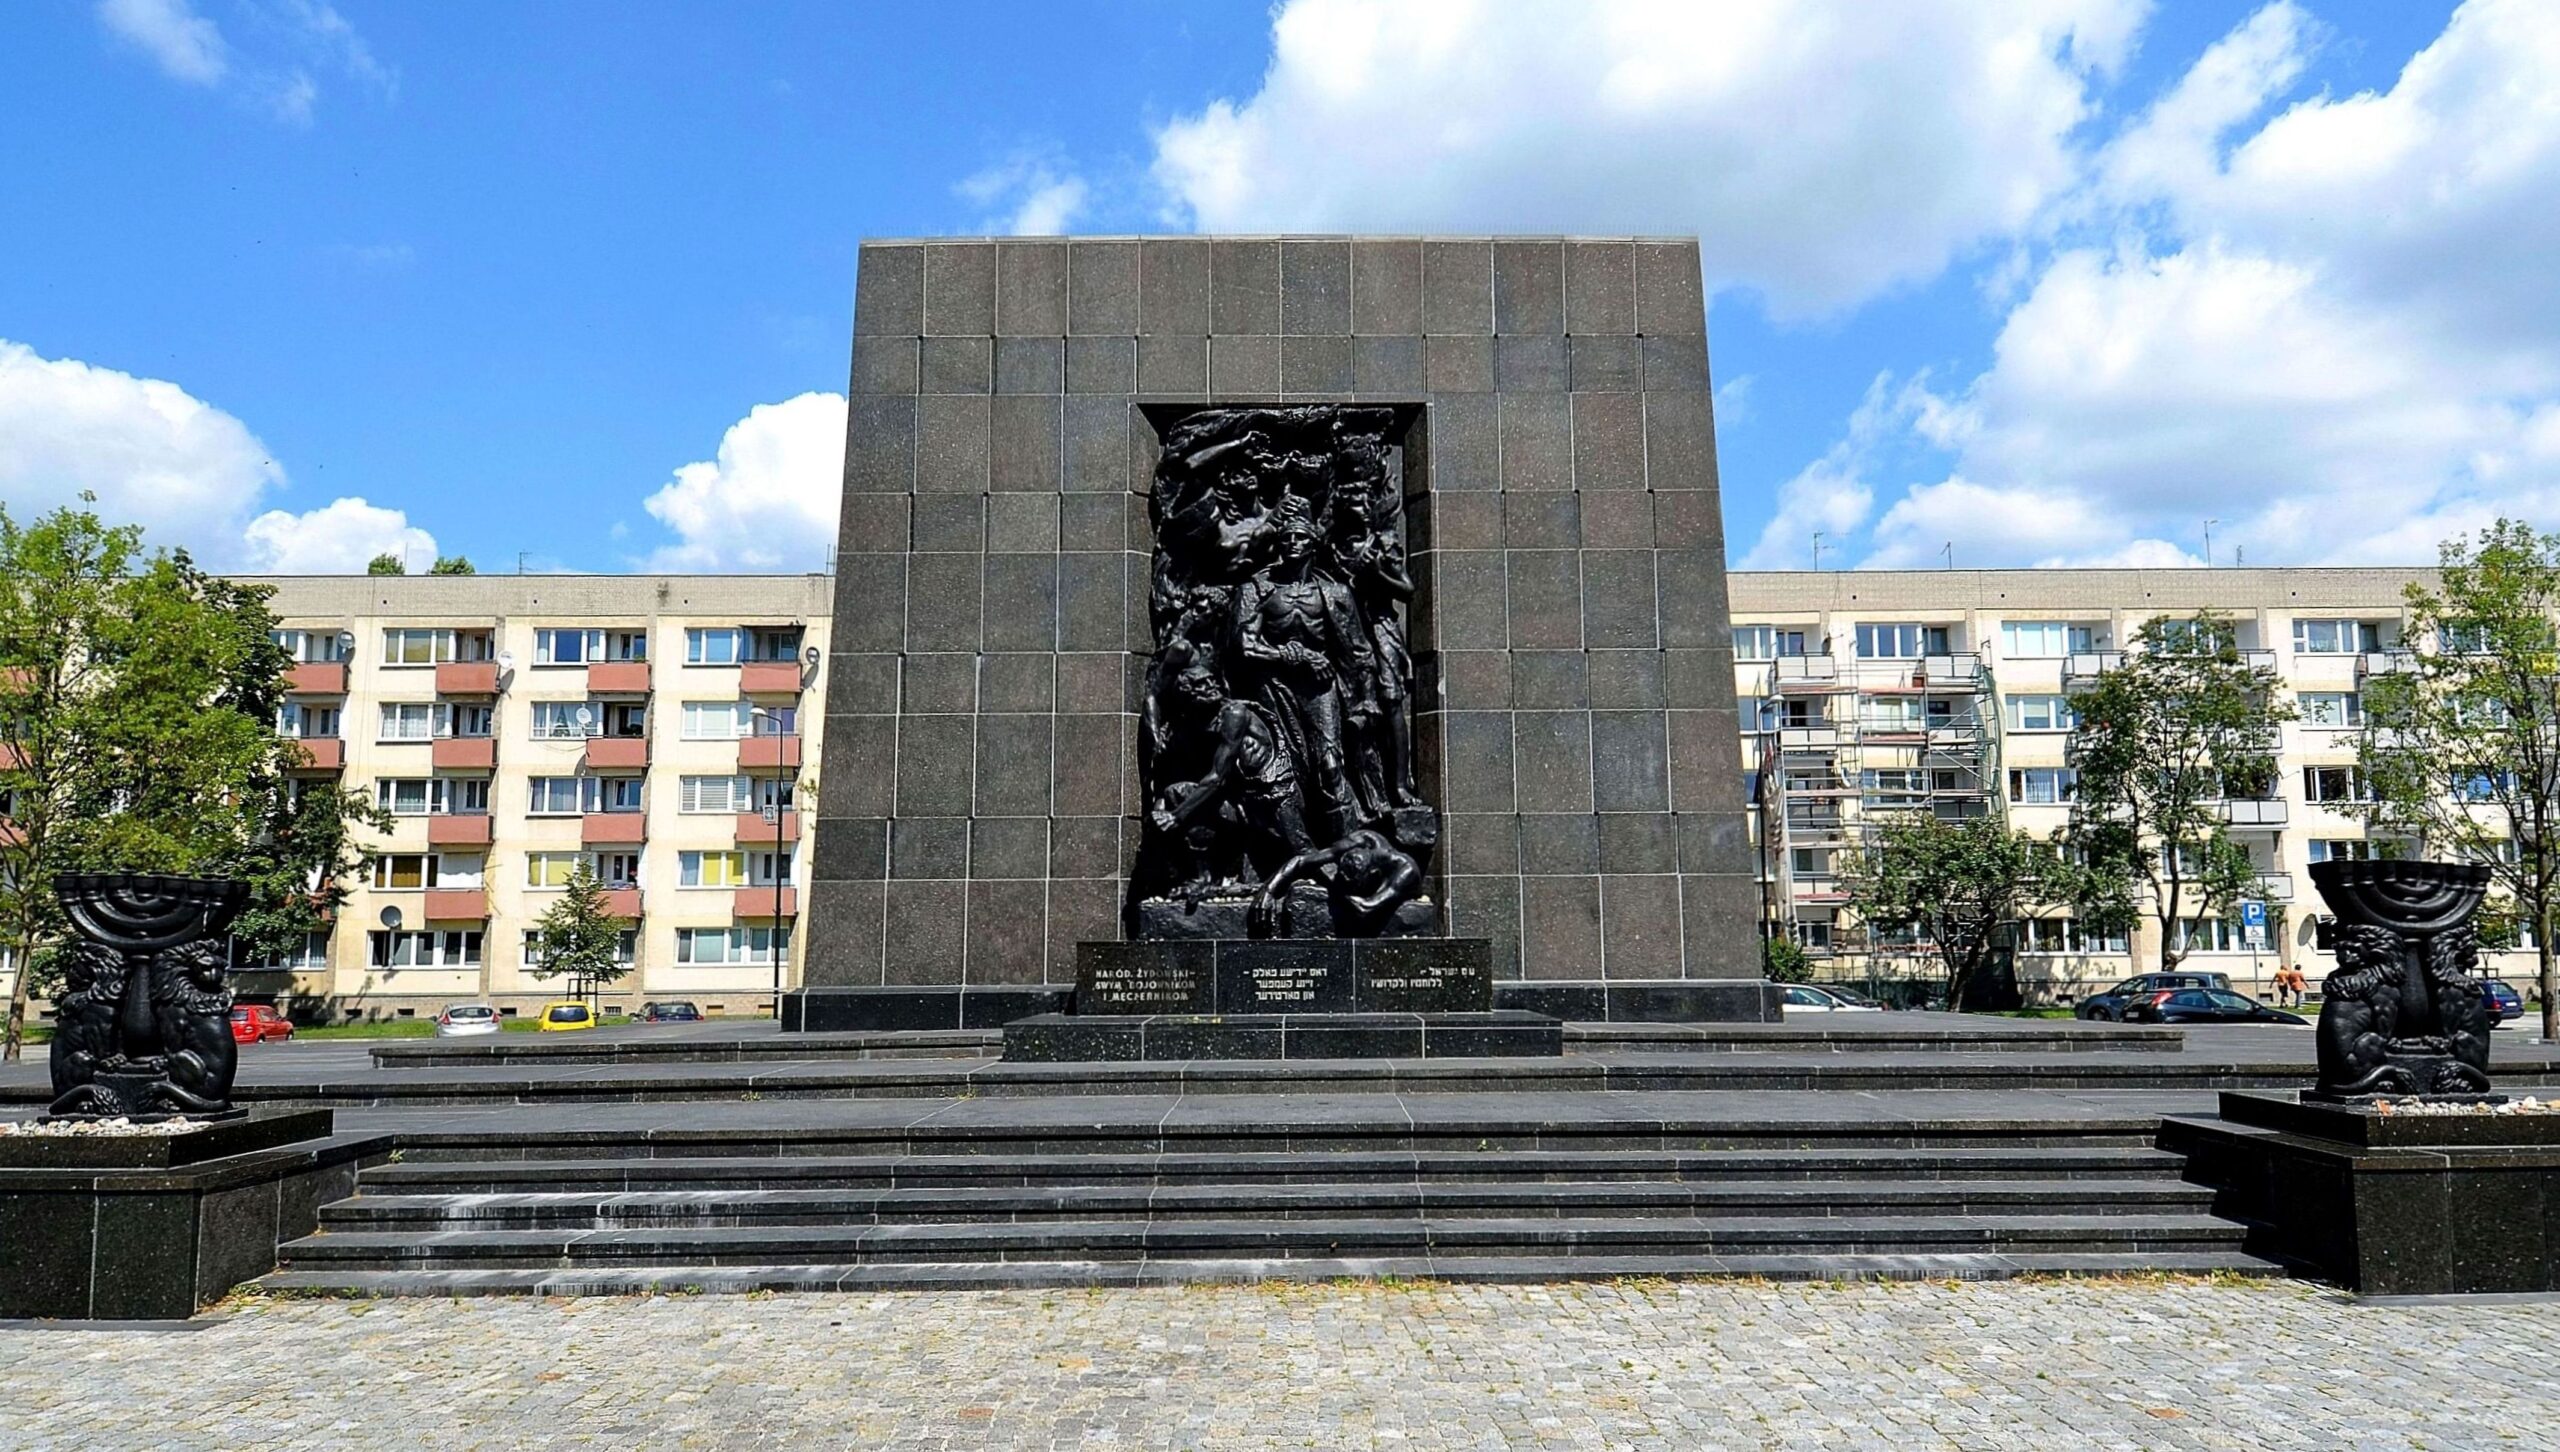 The Warsaw Ghetto Memorial